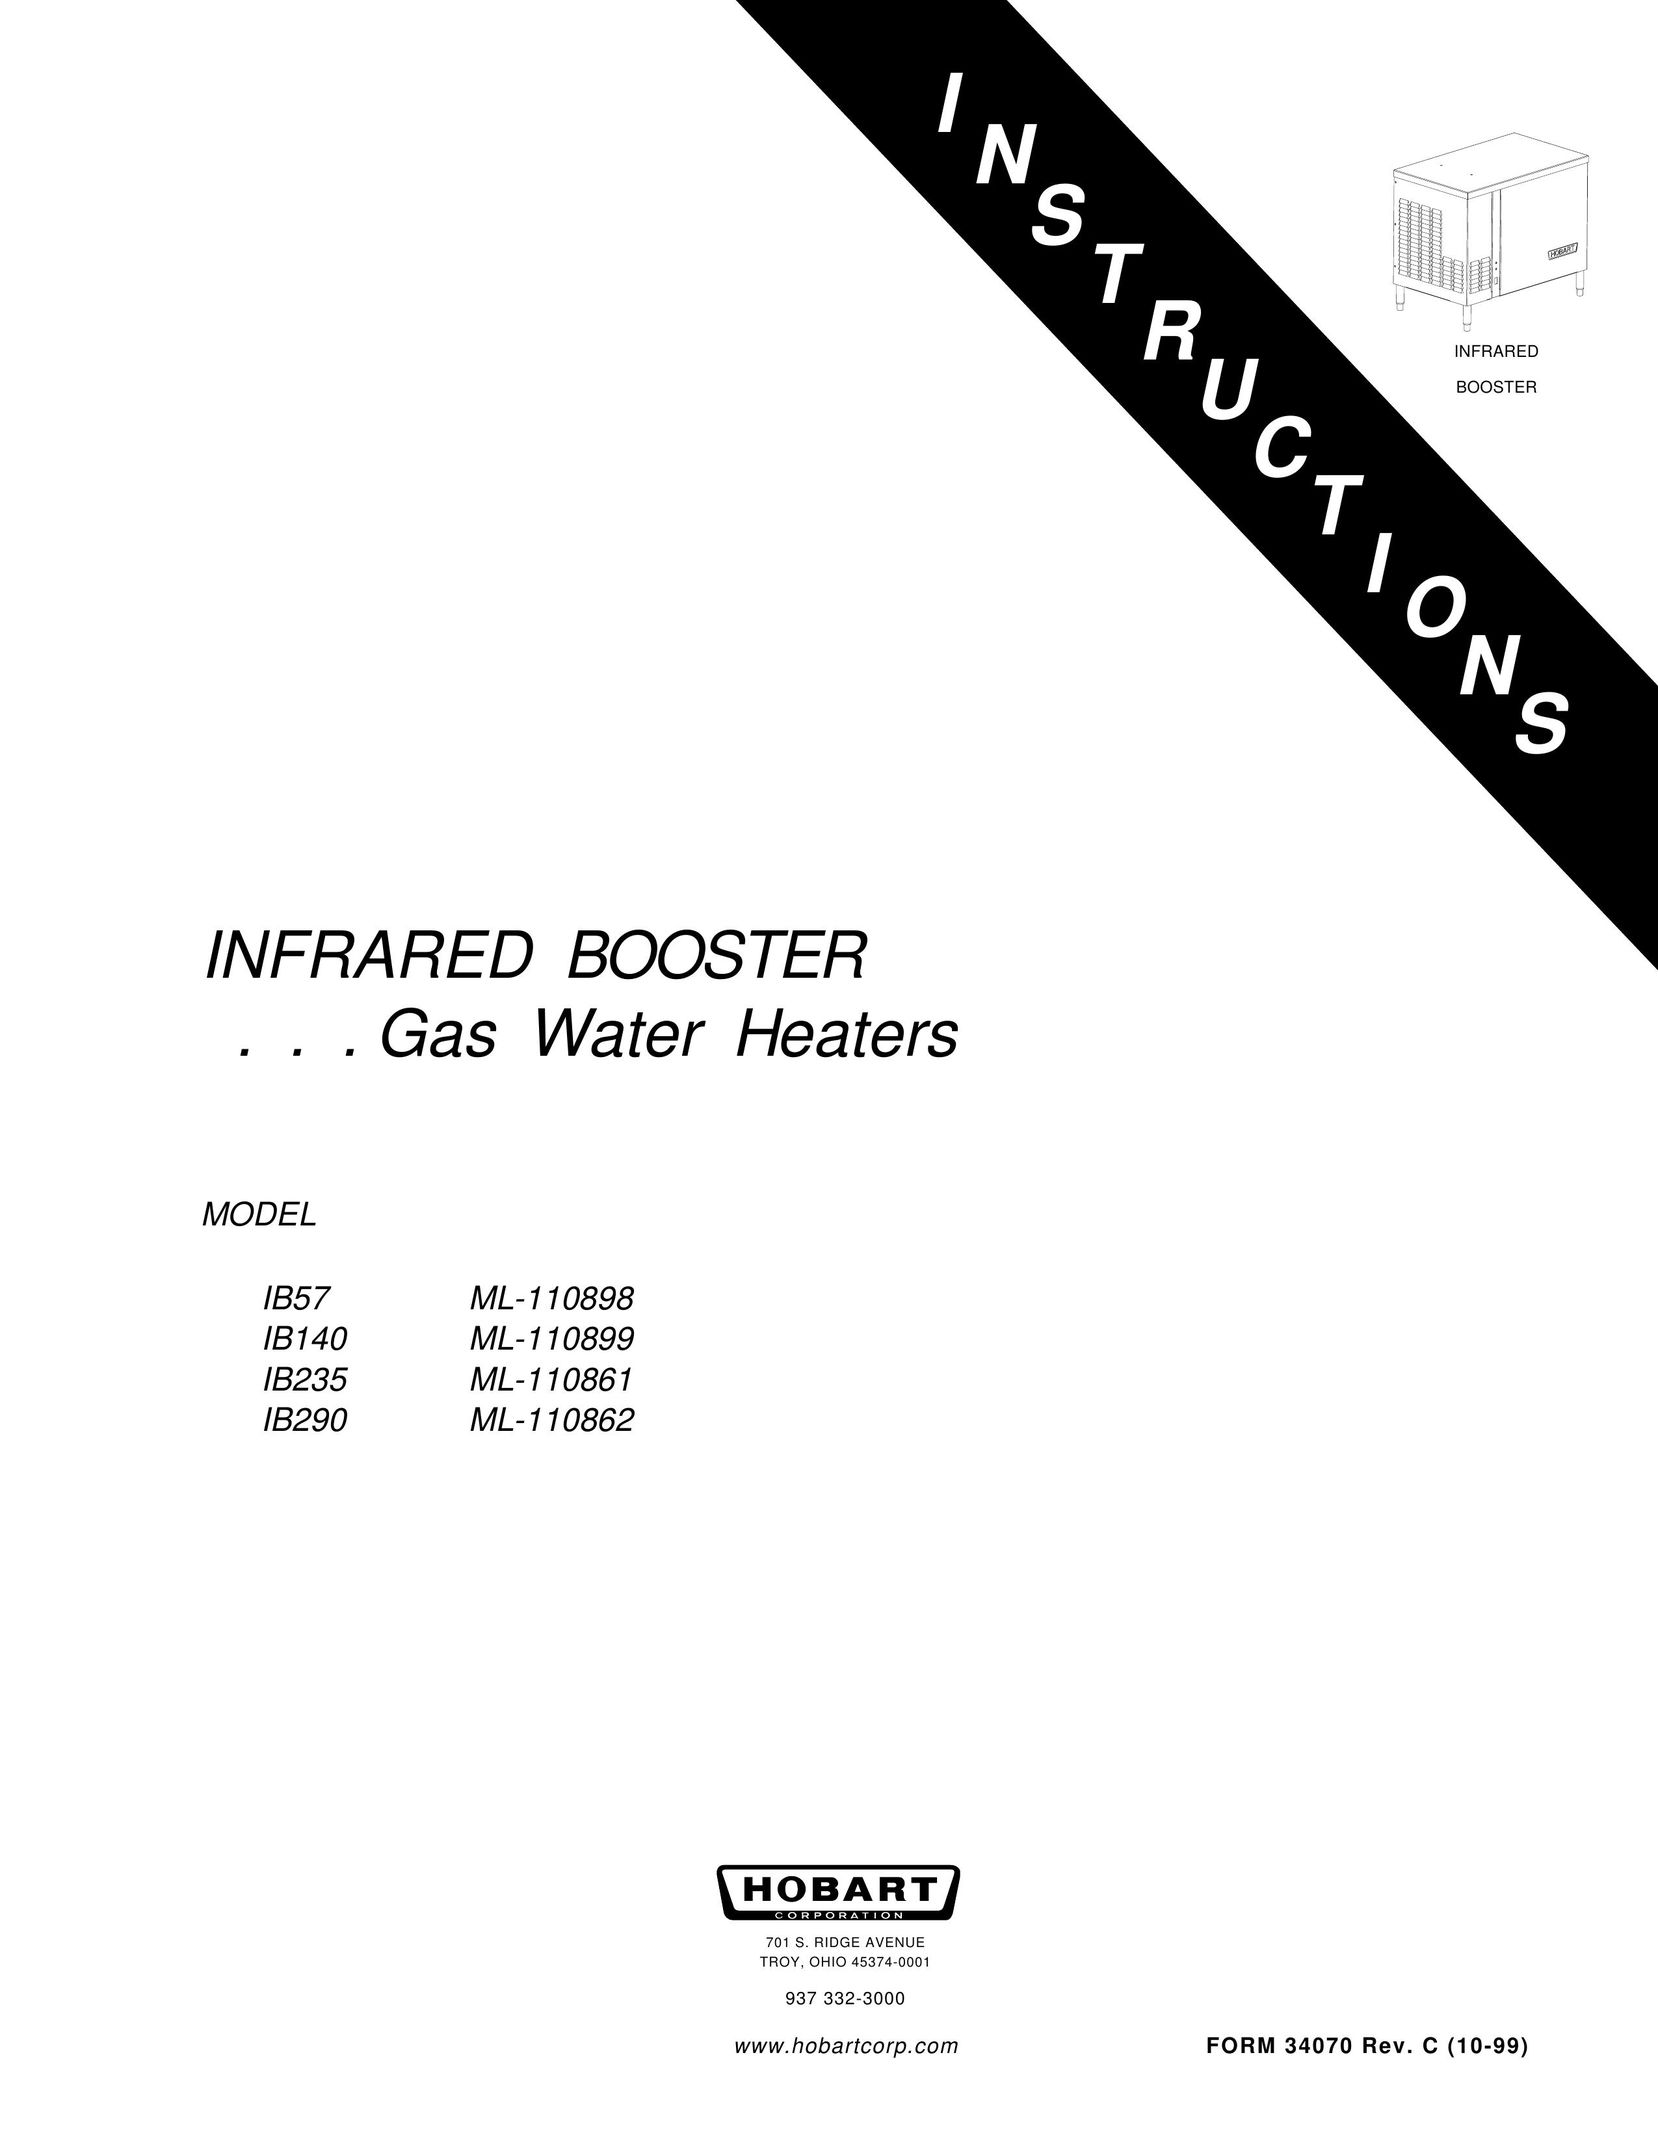 Hobart IB235 ML-110861 Water Heater User Manual